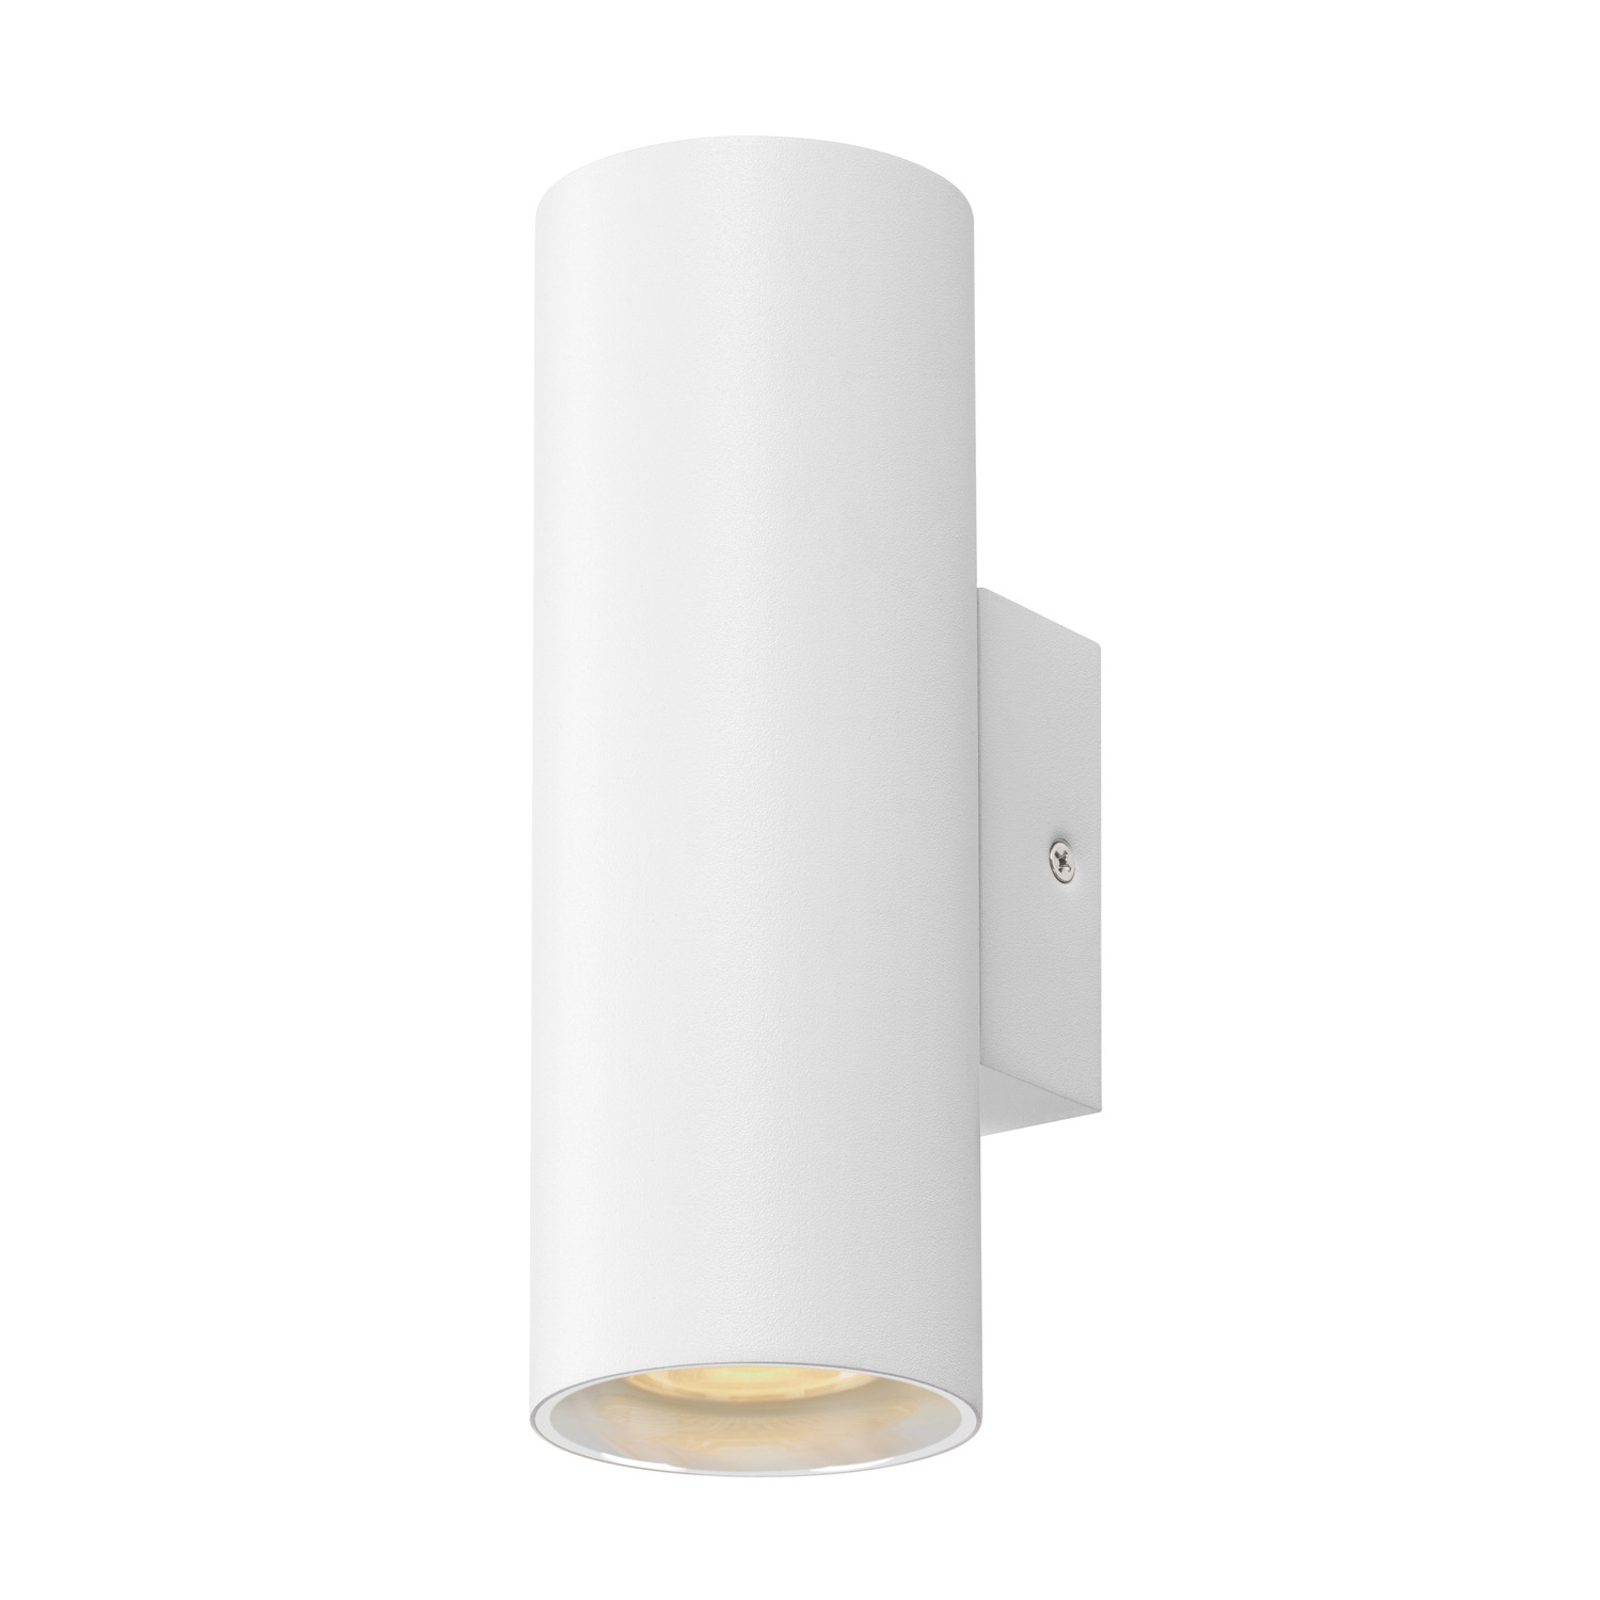 SLV Asto Tube wall light, GU10, up/down, white